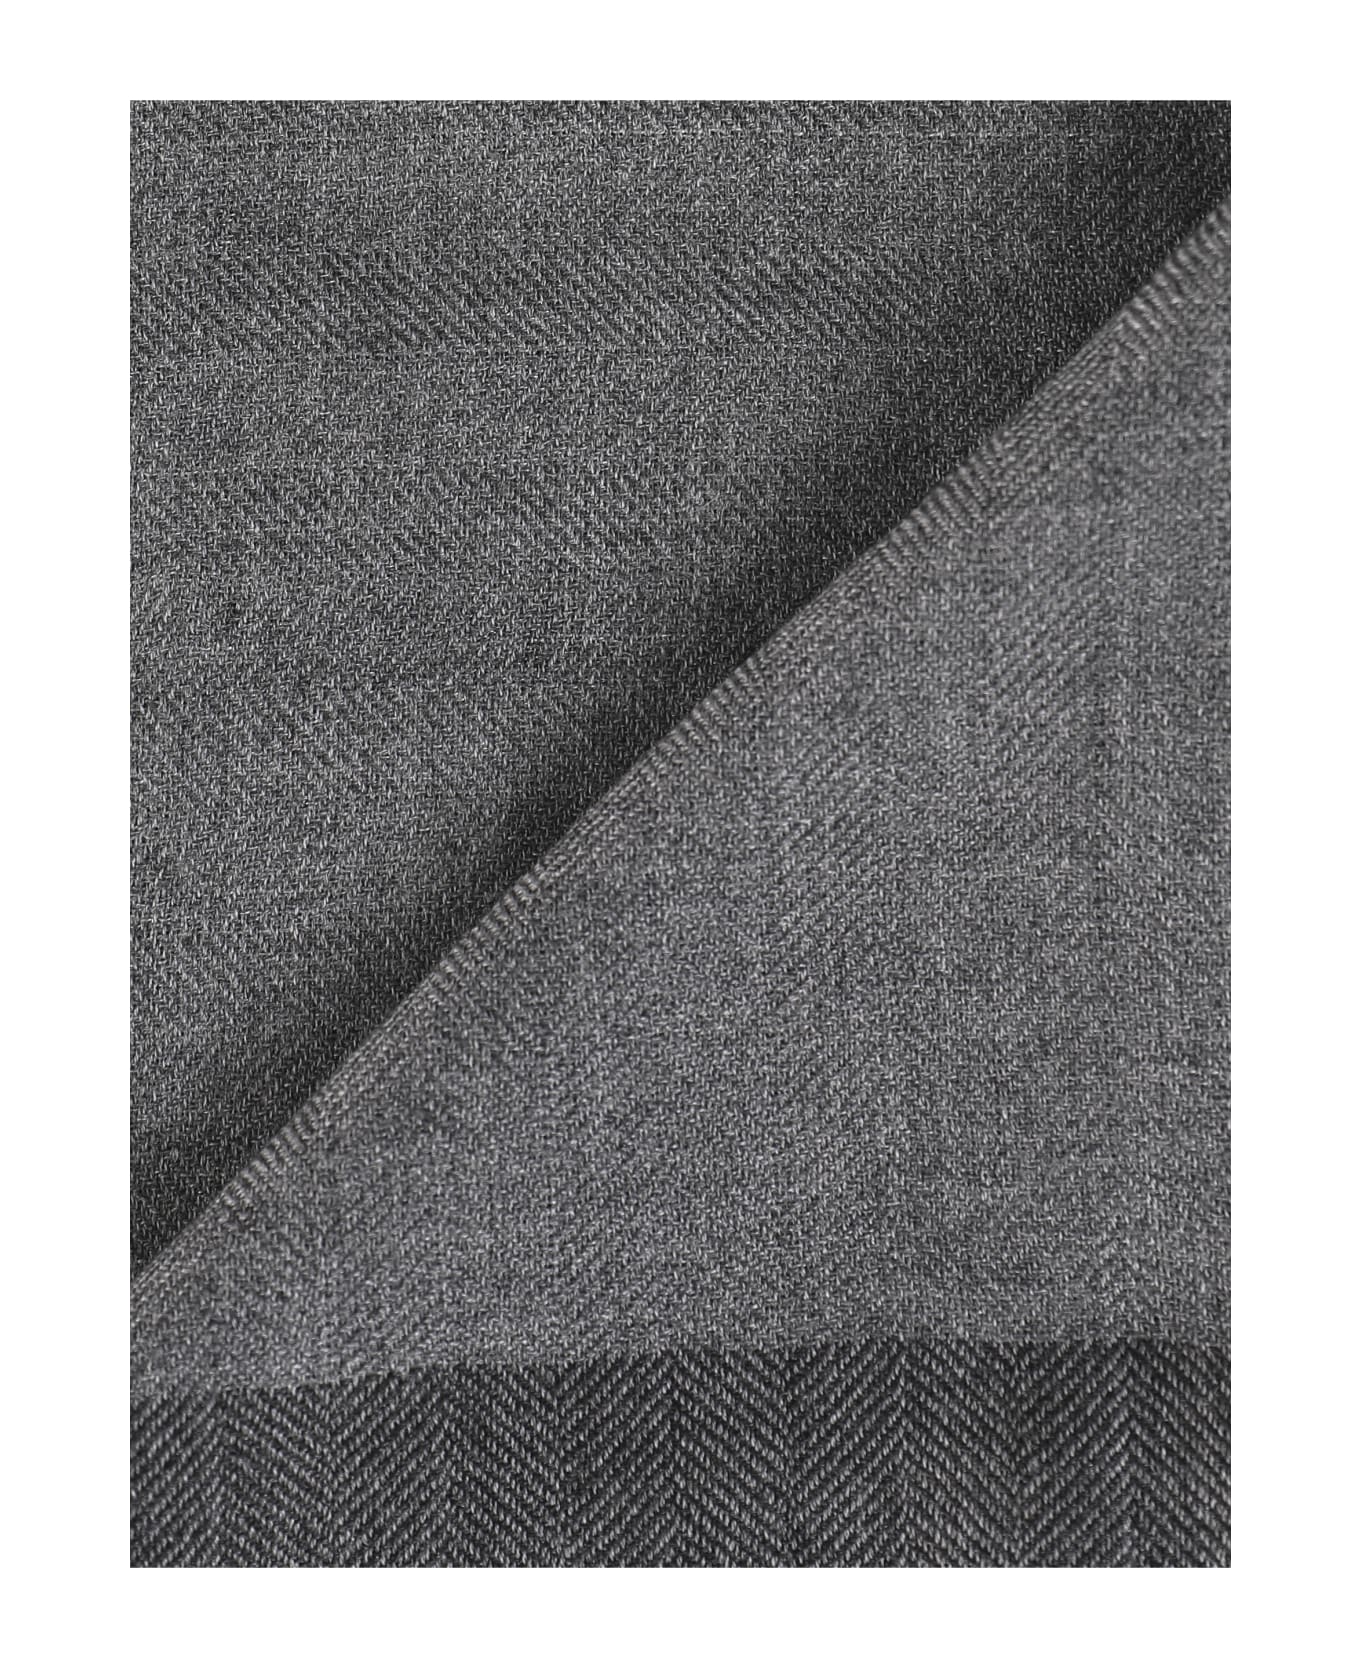 Ferragamo Scarf In Silk And Cashmere - Grey スカーフ